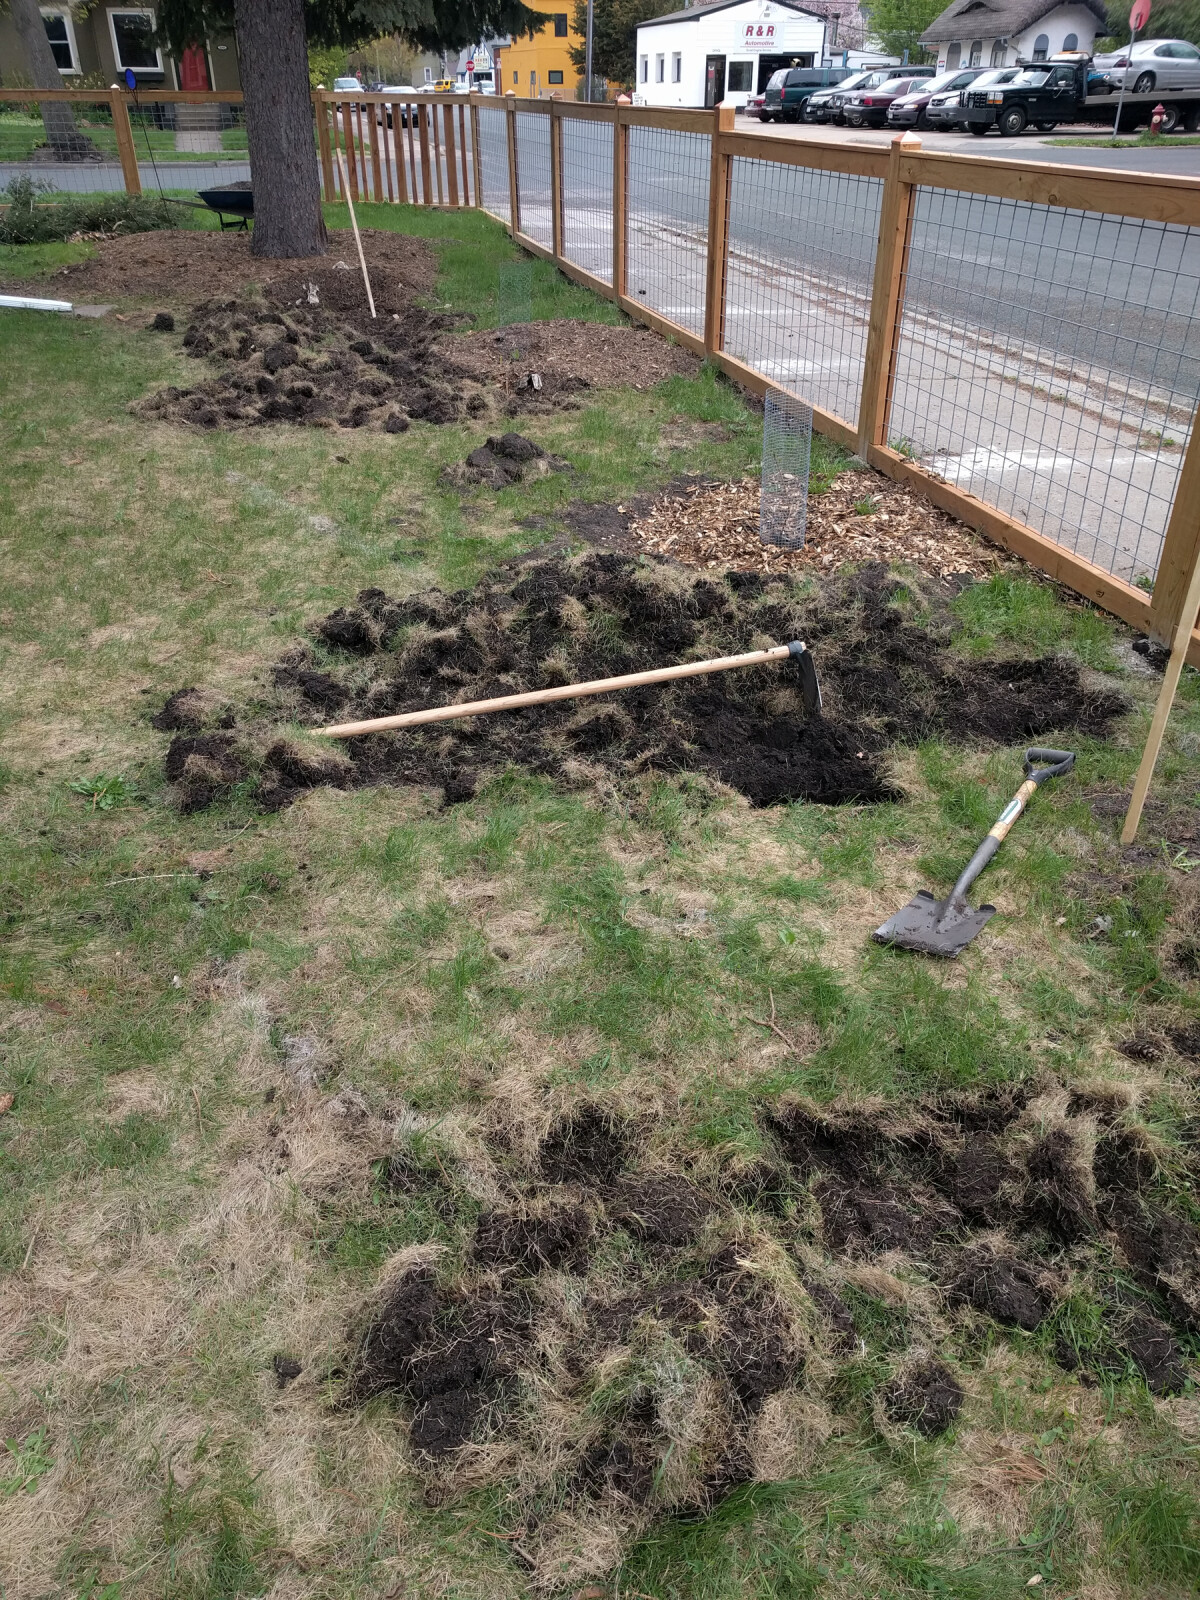 Partially dug-up sod